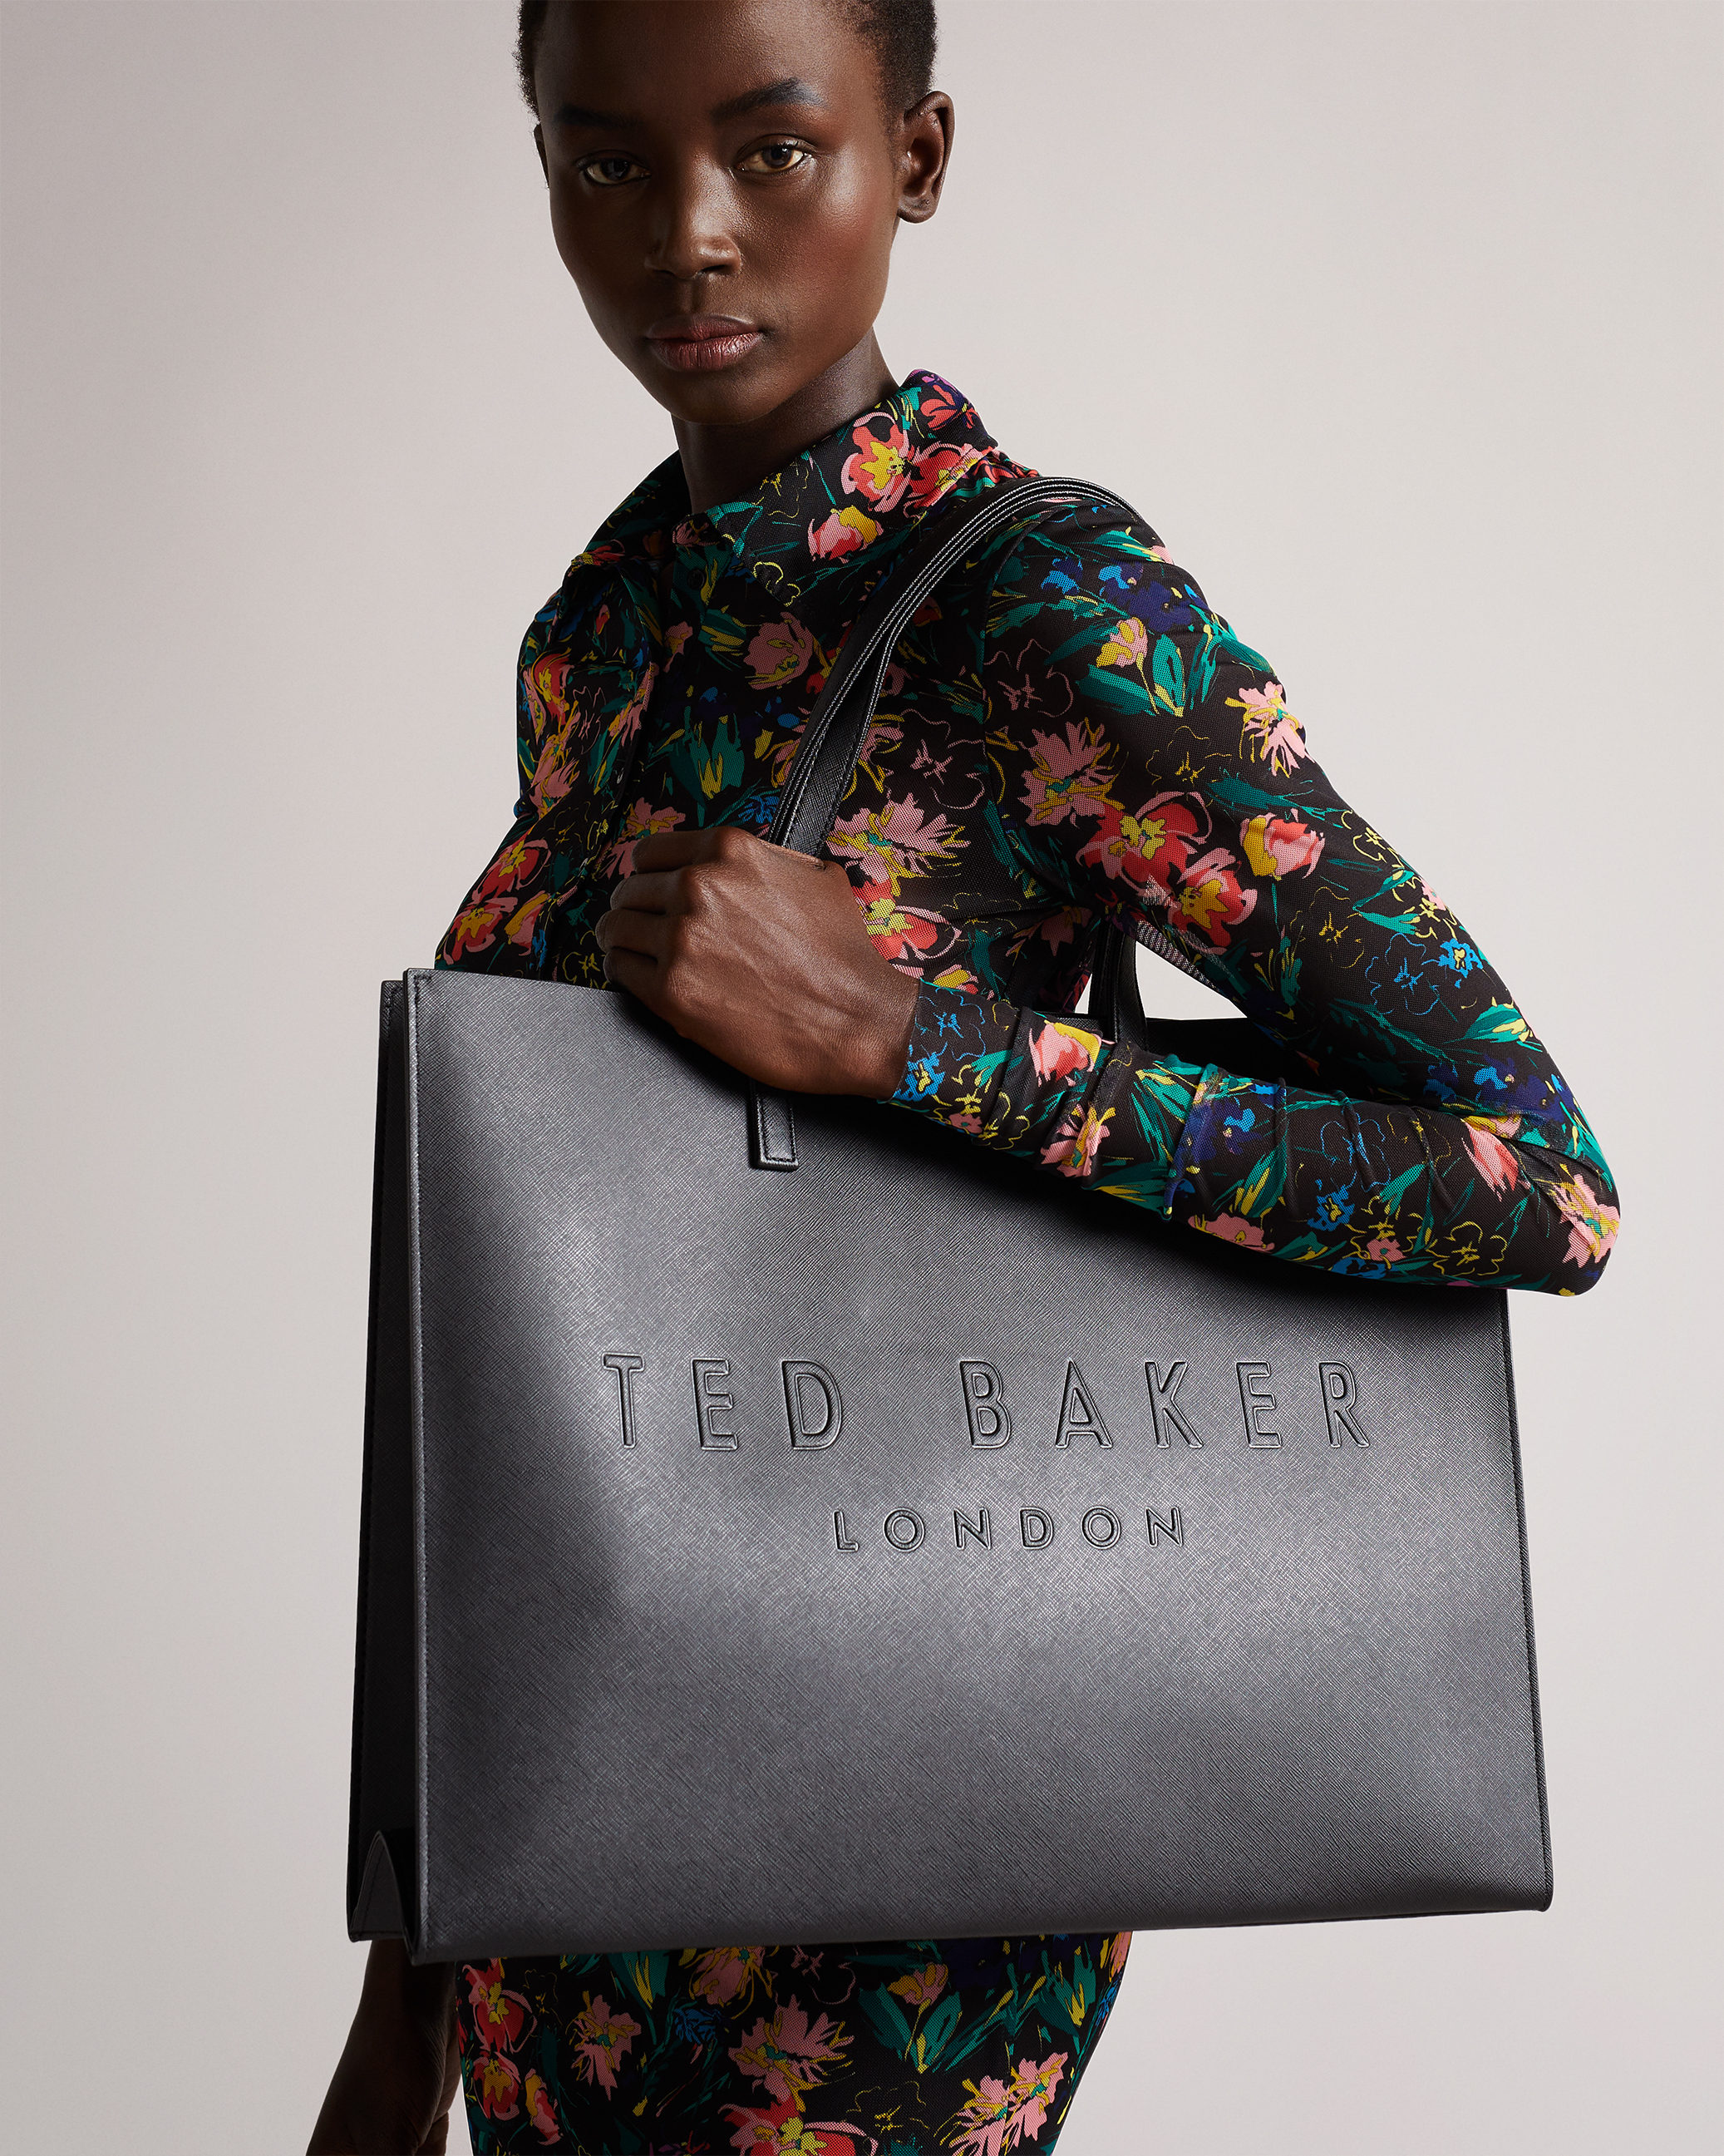 Ted Baker Tote Bag Sale South Africa - Ted Baker Outlet Online